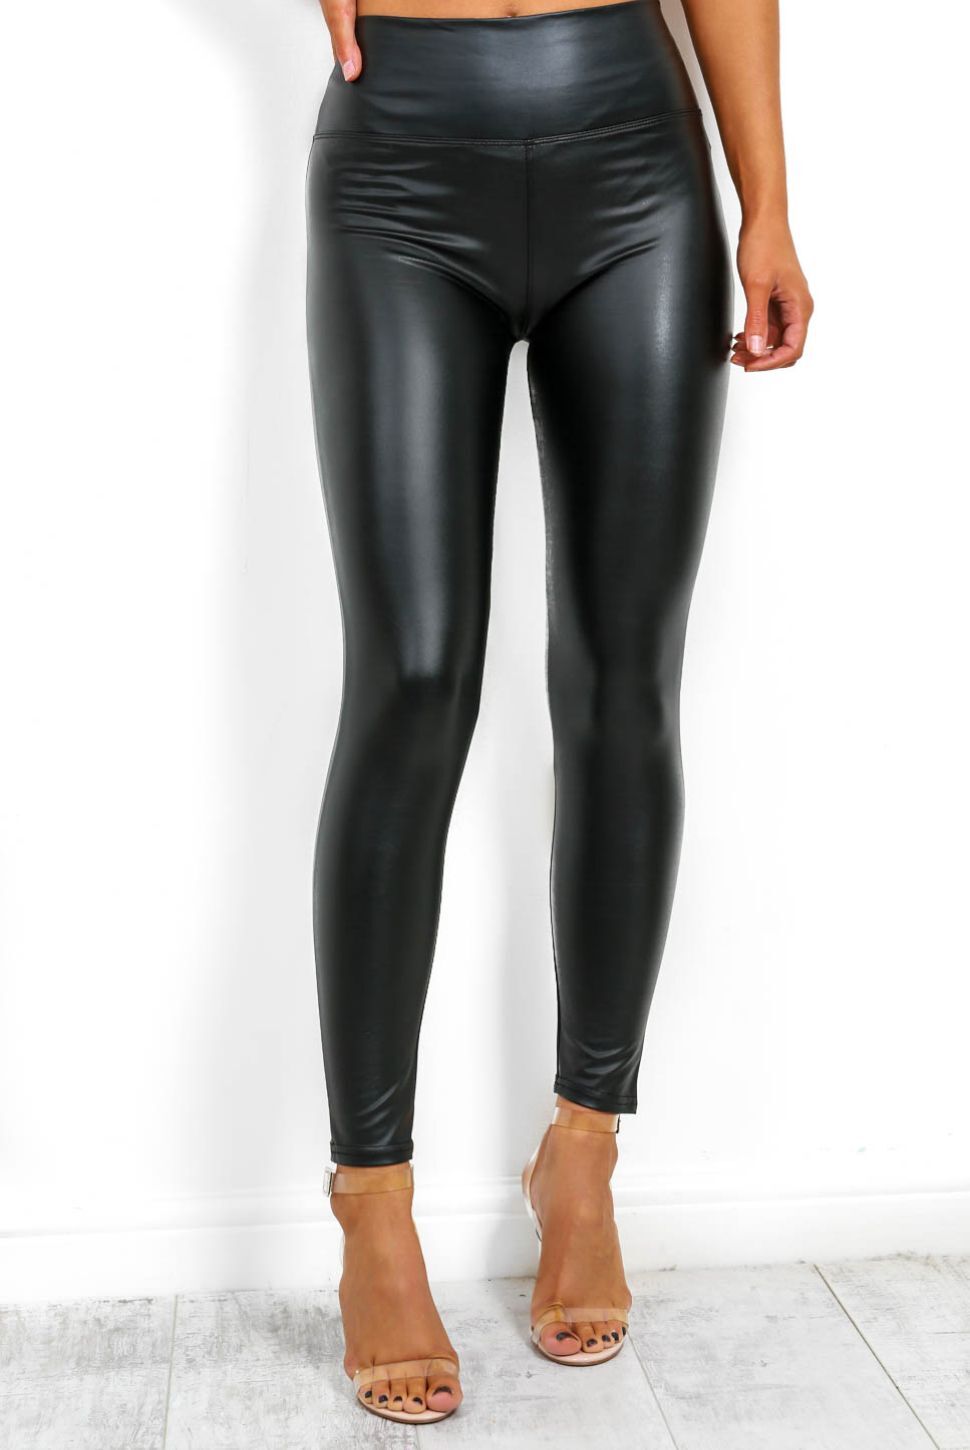 Next To Skin Faux Leather Leggings-Black(RESTOCKED) | Impoze Style™